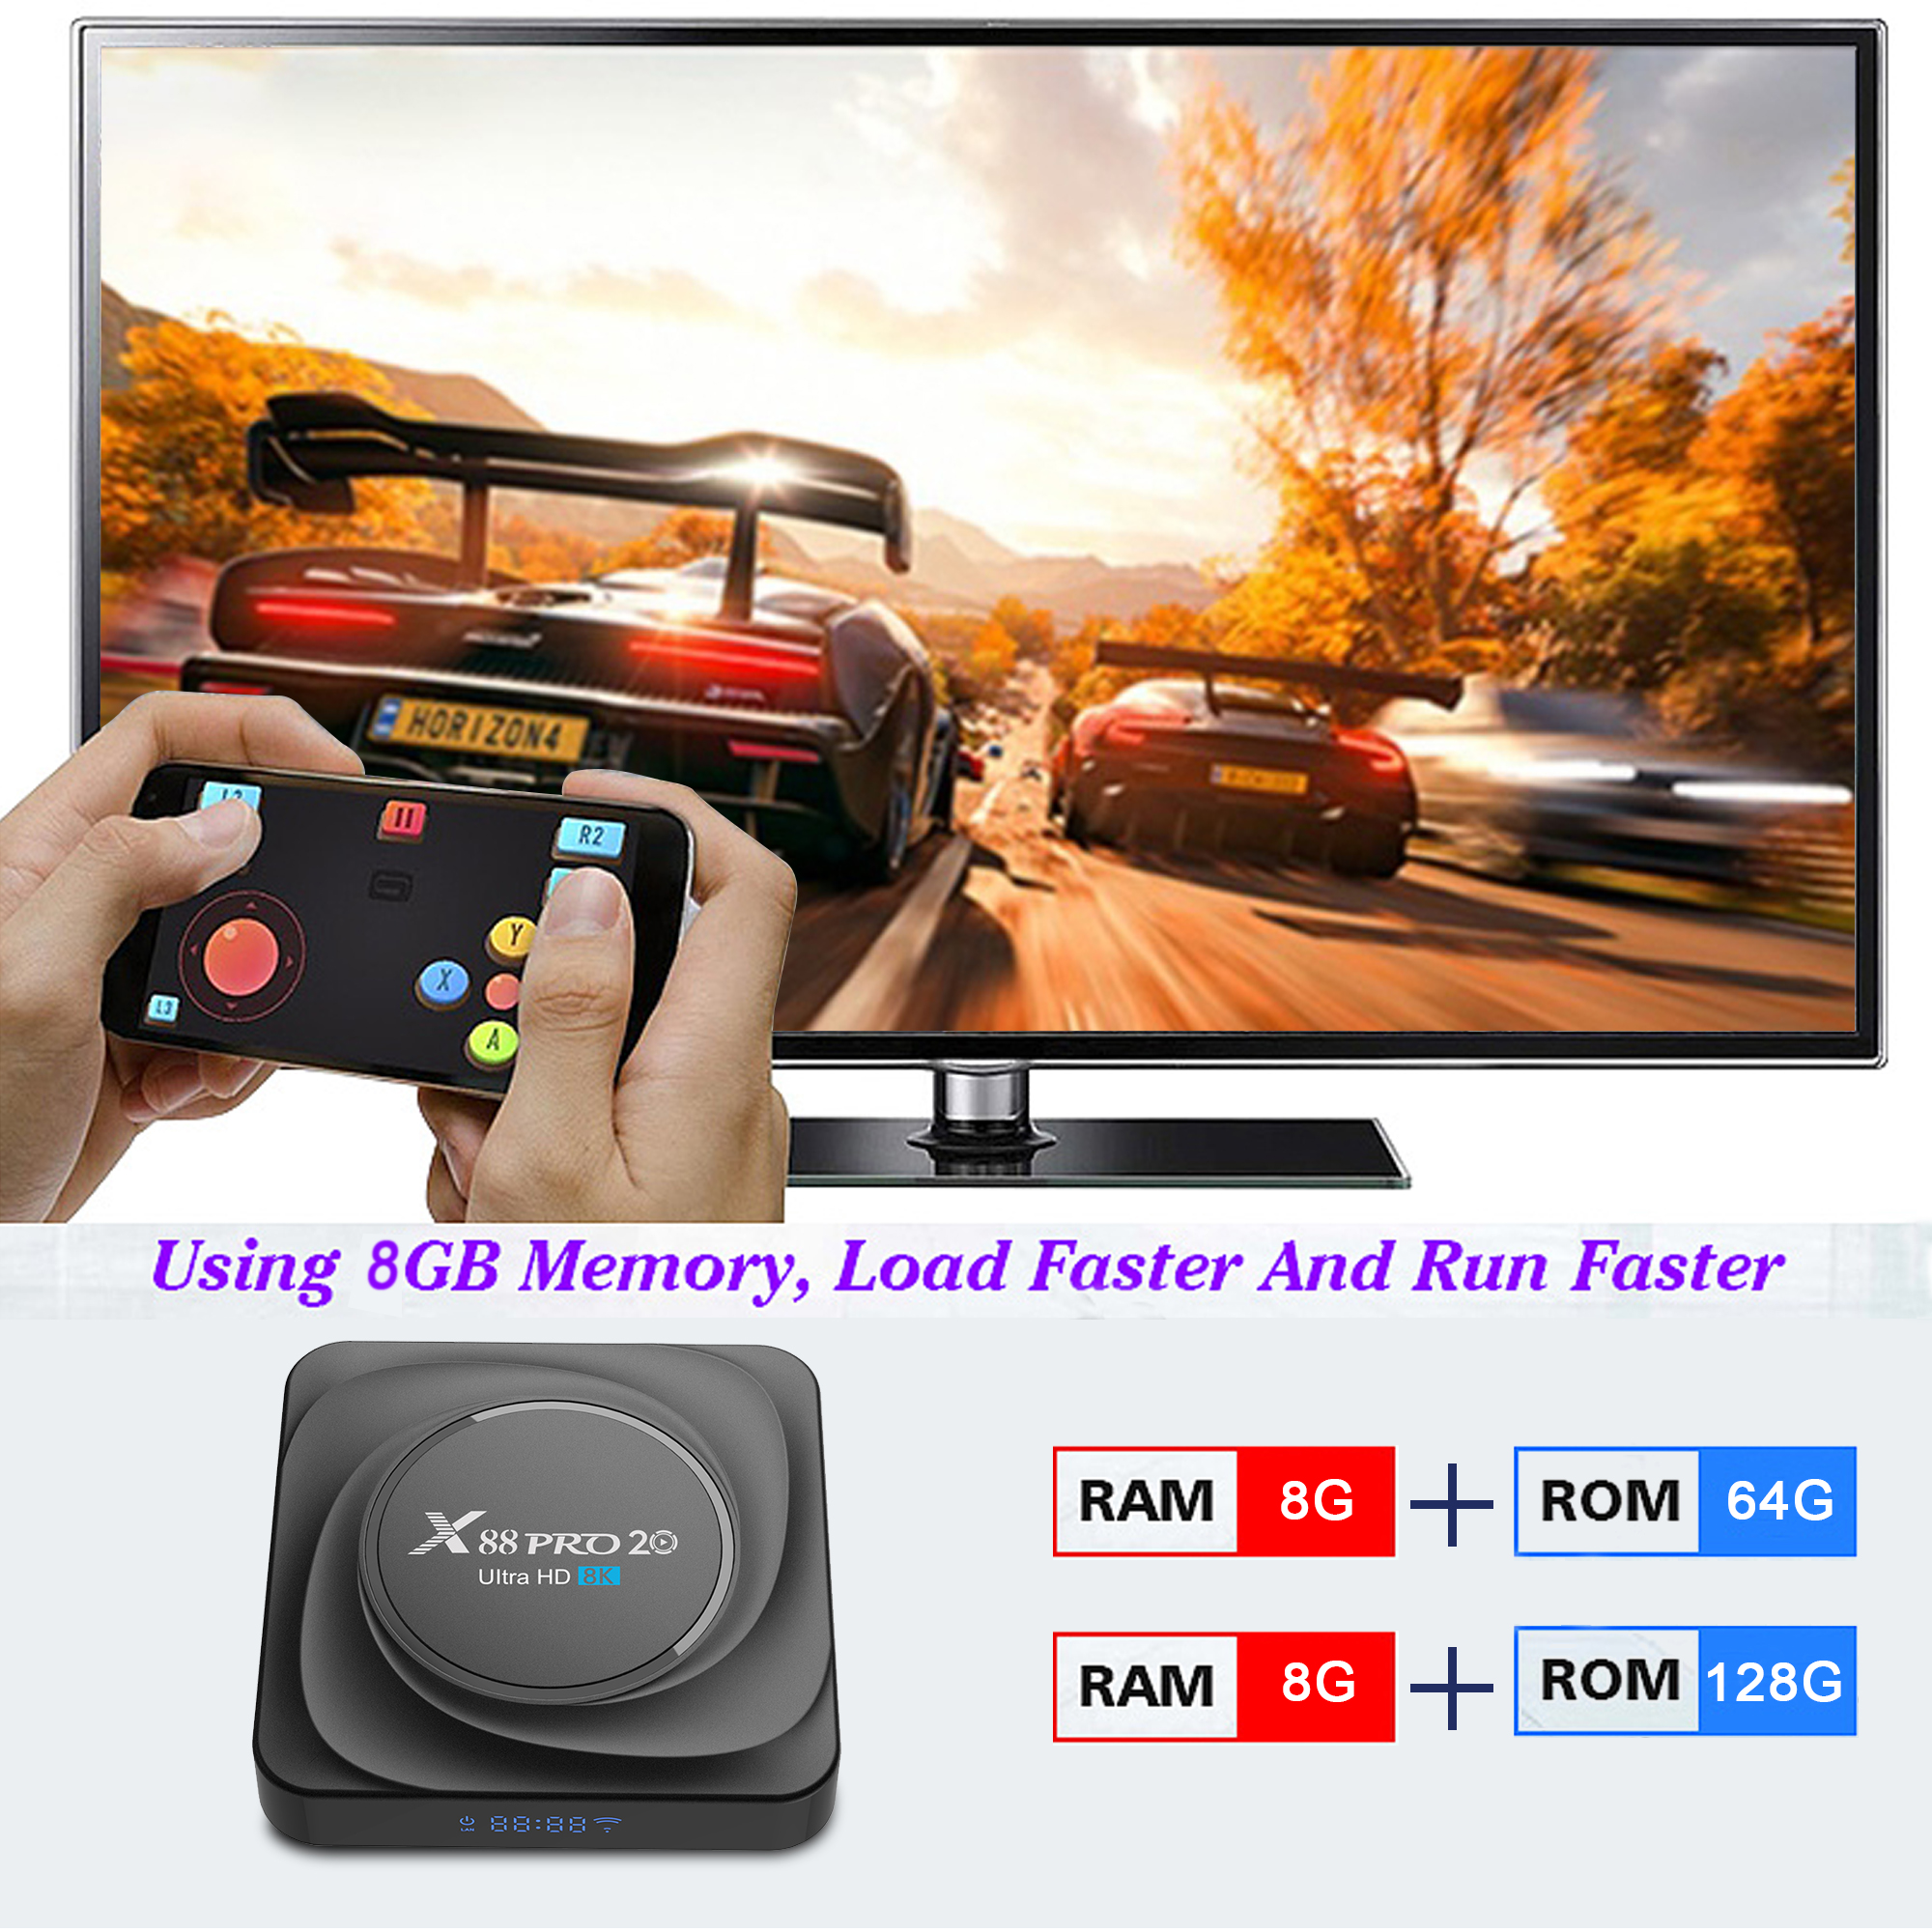 LEMFO-bo-tier-Smart-TV-X88-Pro-20-RK3566-Android-11-8-go-128-go-8K